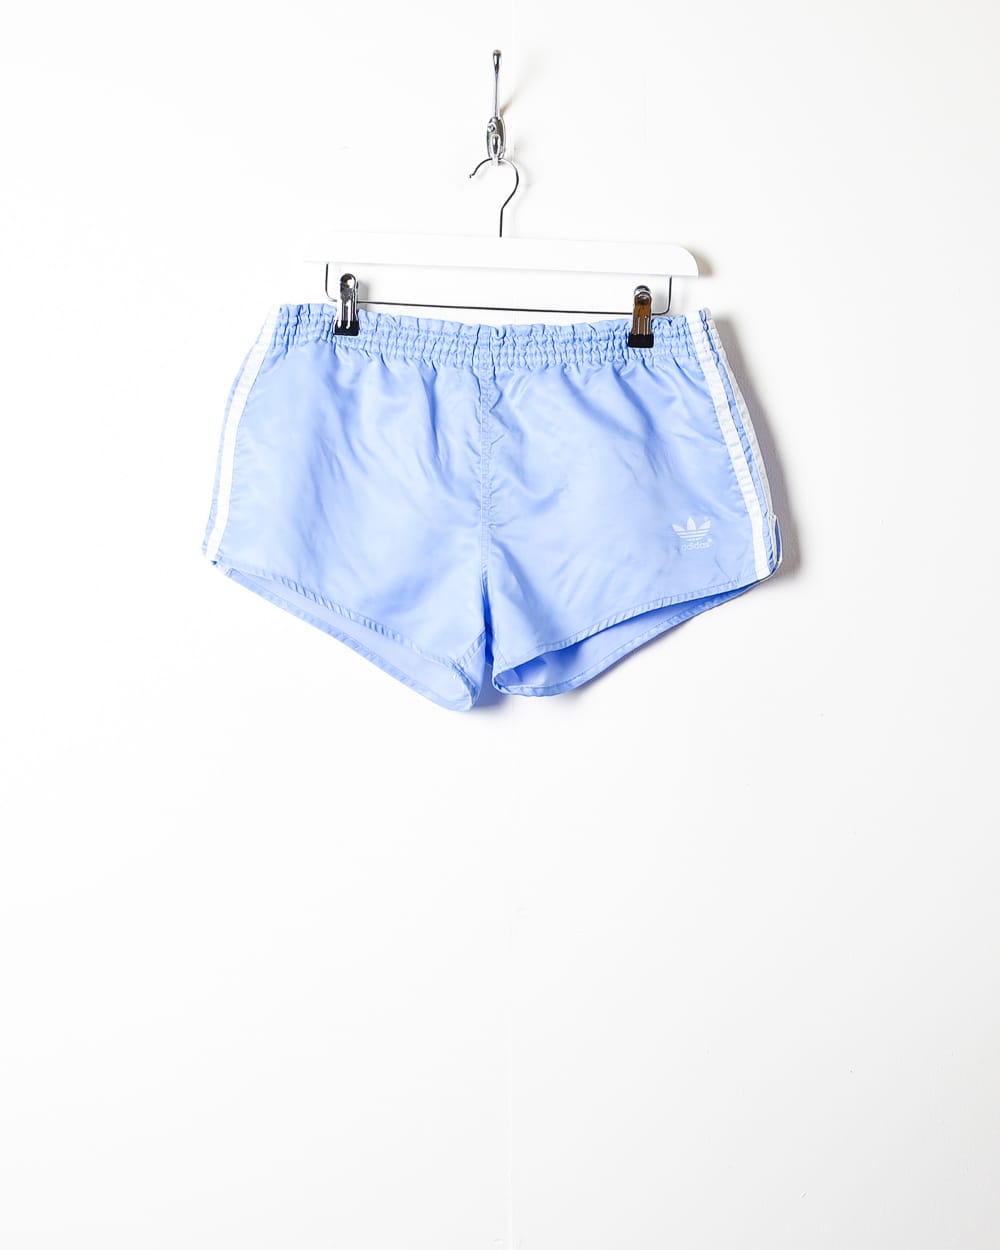 BabyBlue Adidas Short Shorts - Small